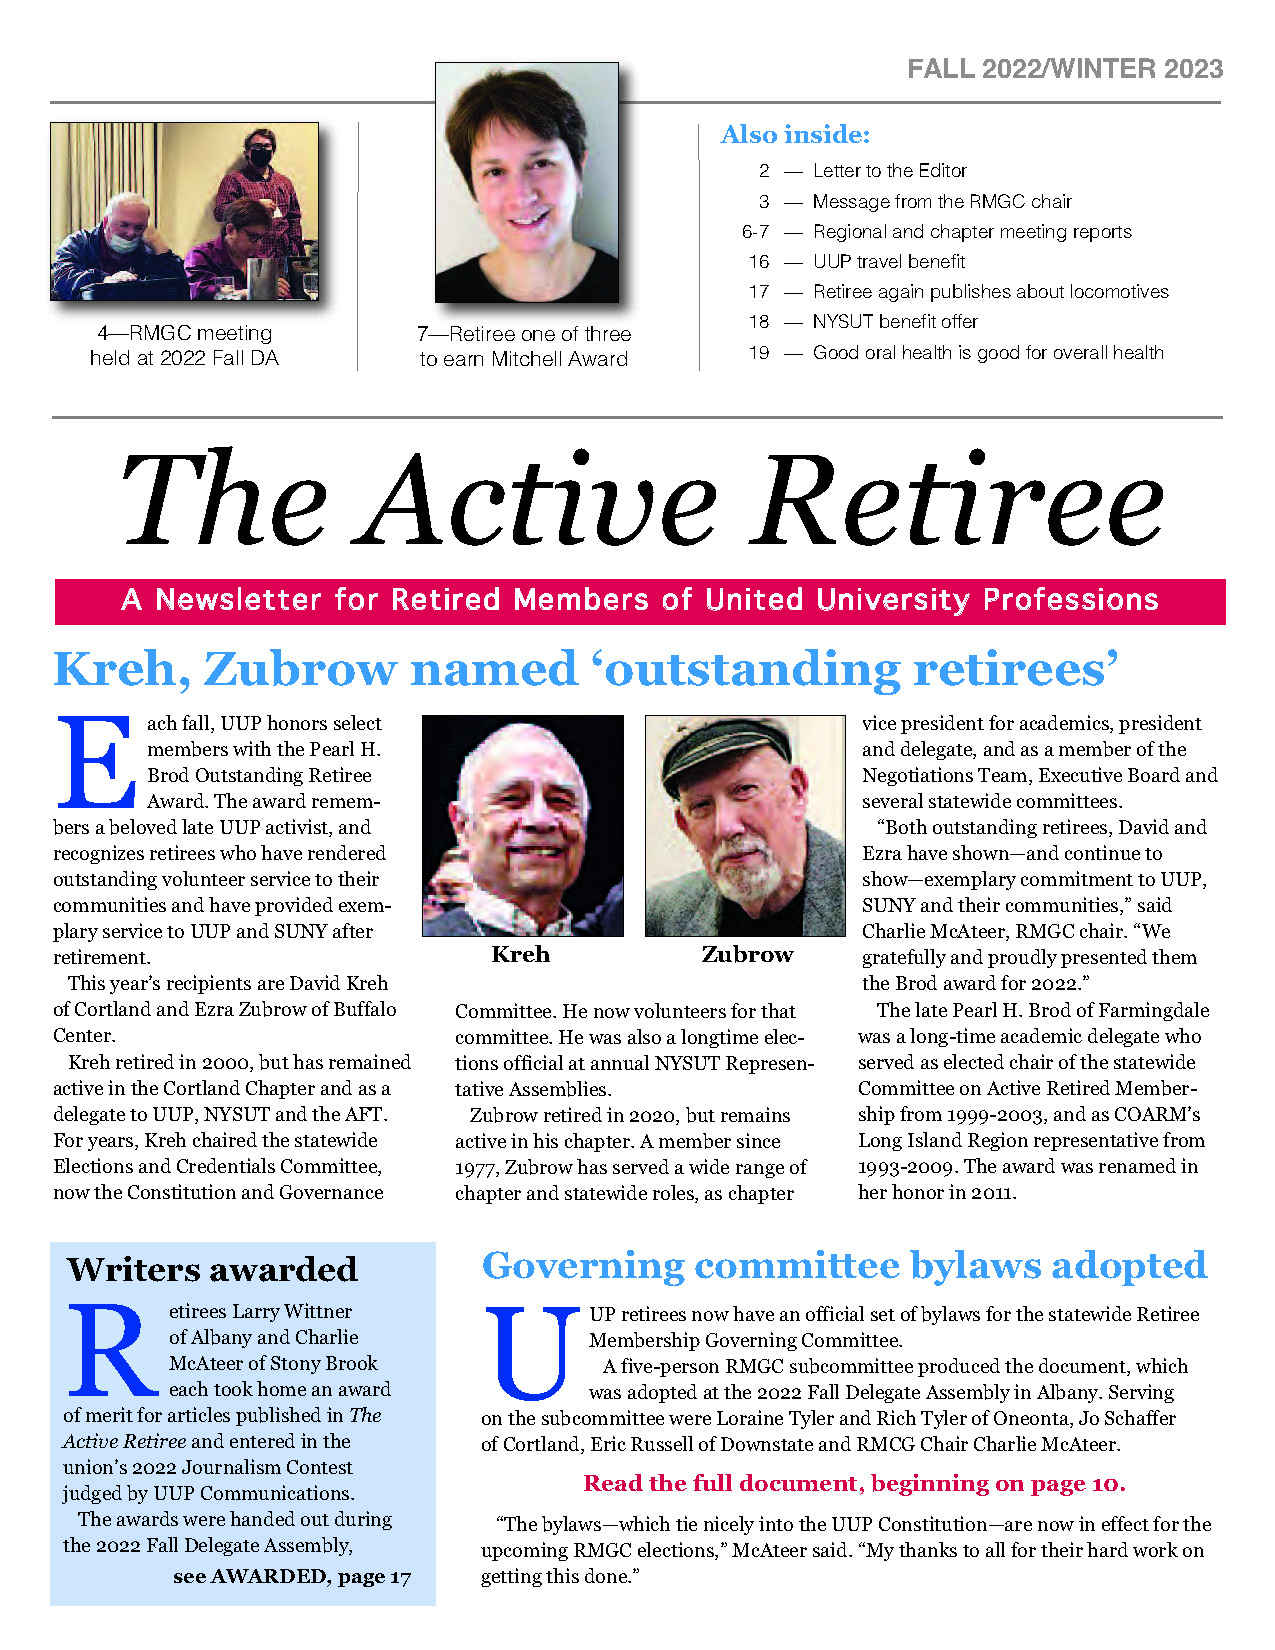 Fall 2022 Active Retiree